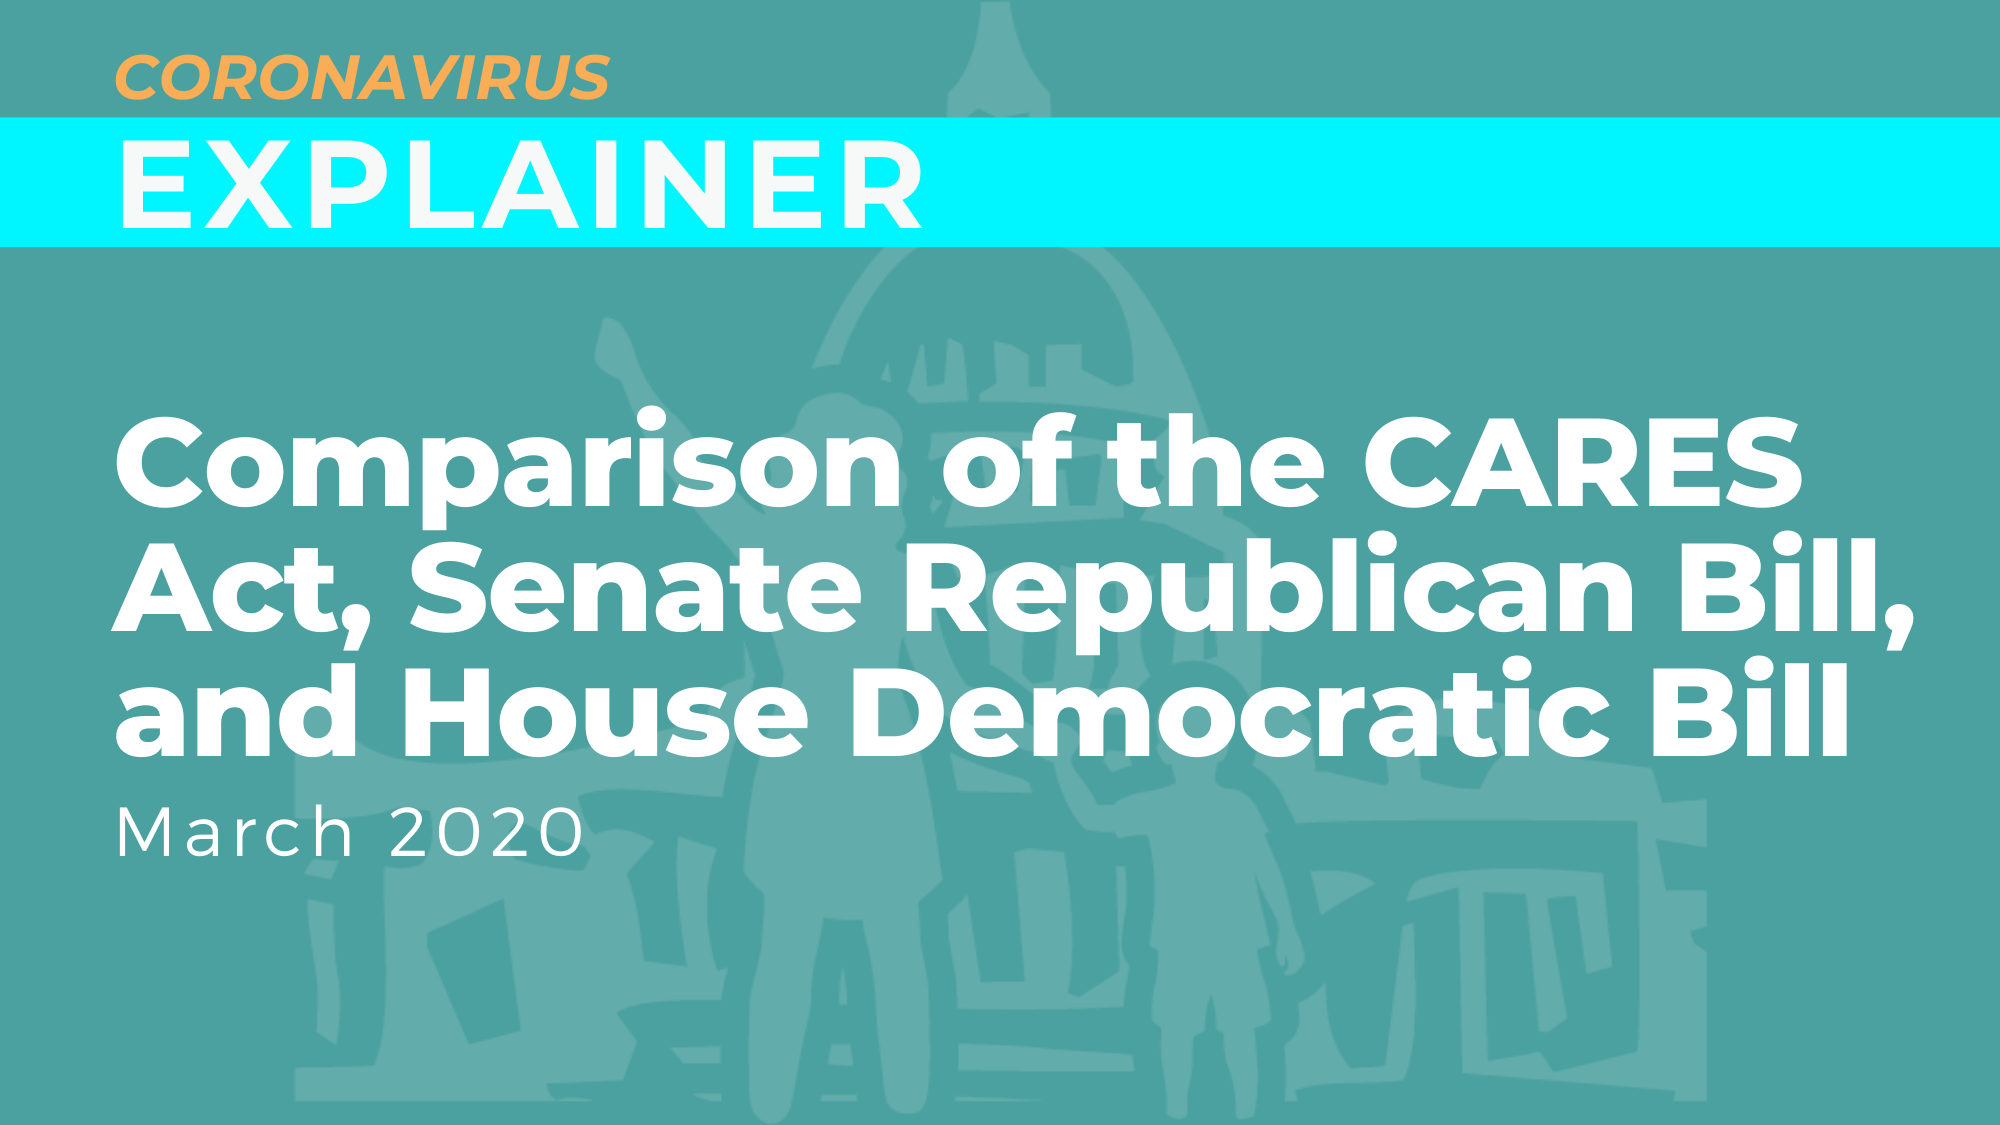 Comparison of the CARES Act, Senate Republican Bill and House Democratic Bill